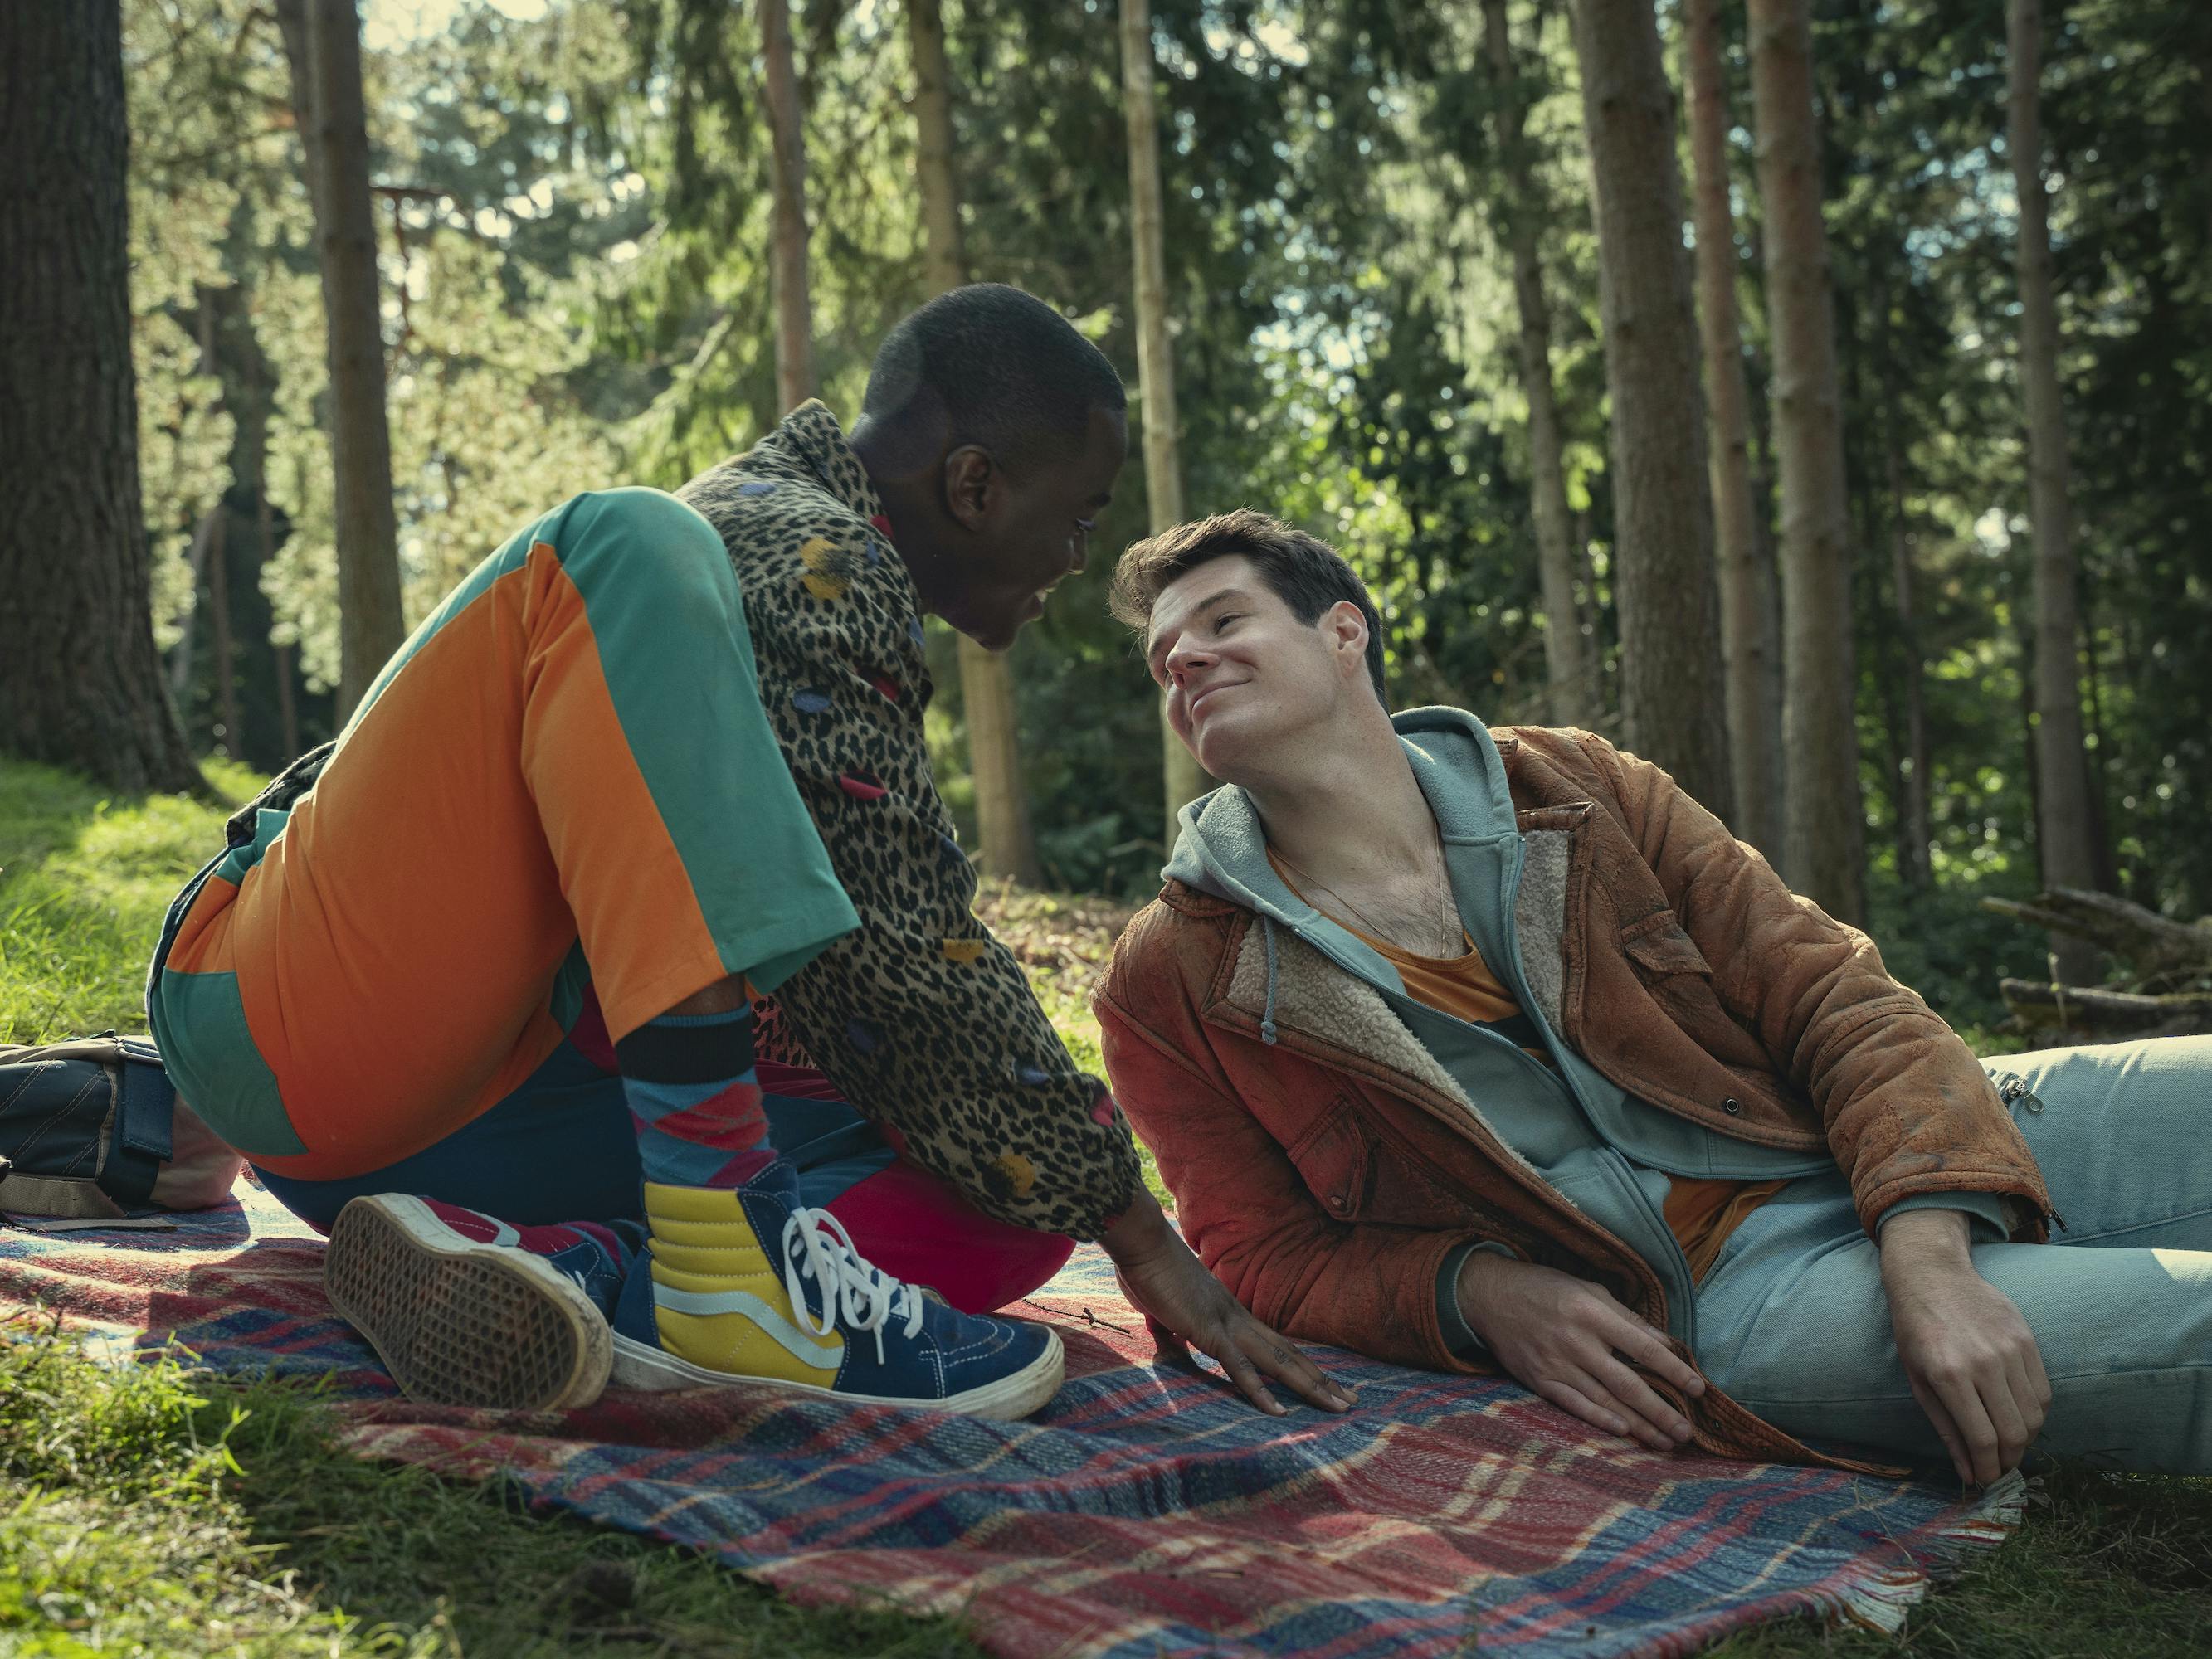 Eric Effiong (Ncuti Gatwa) and Adam Groff (Connor Swindells) look romantic on a picnic blanket. 